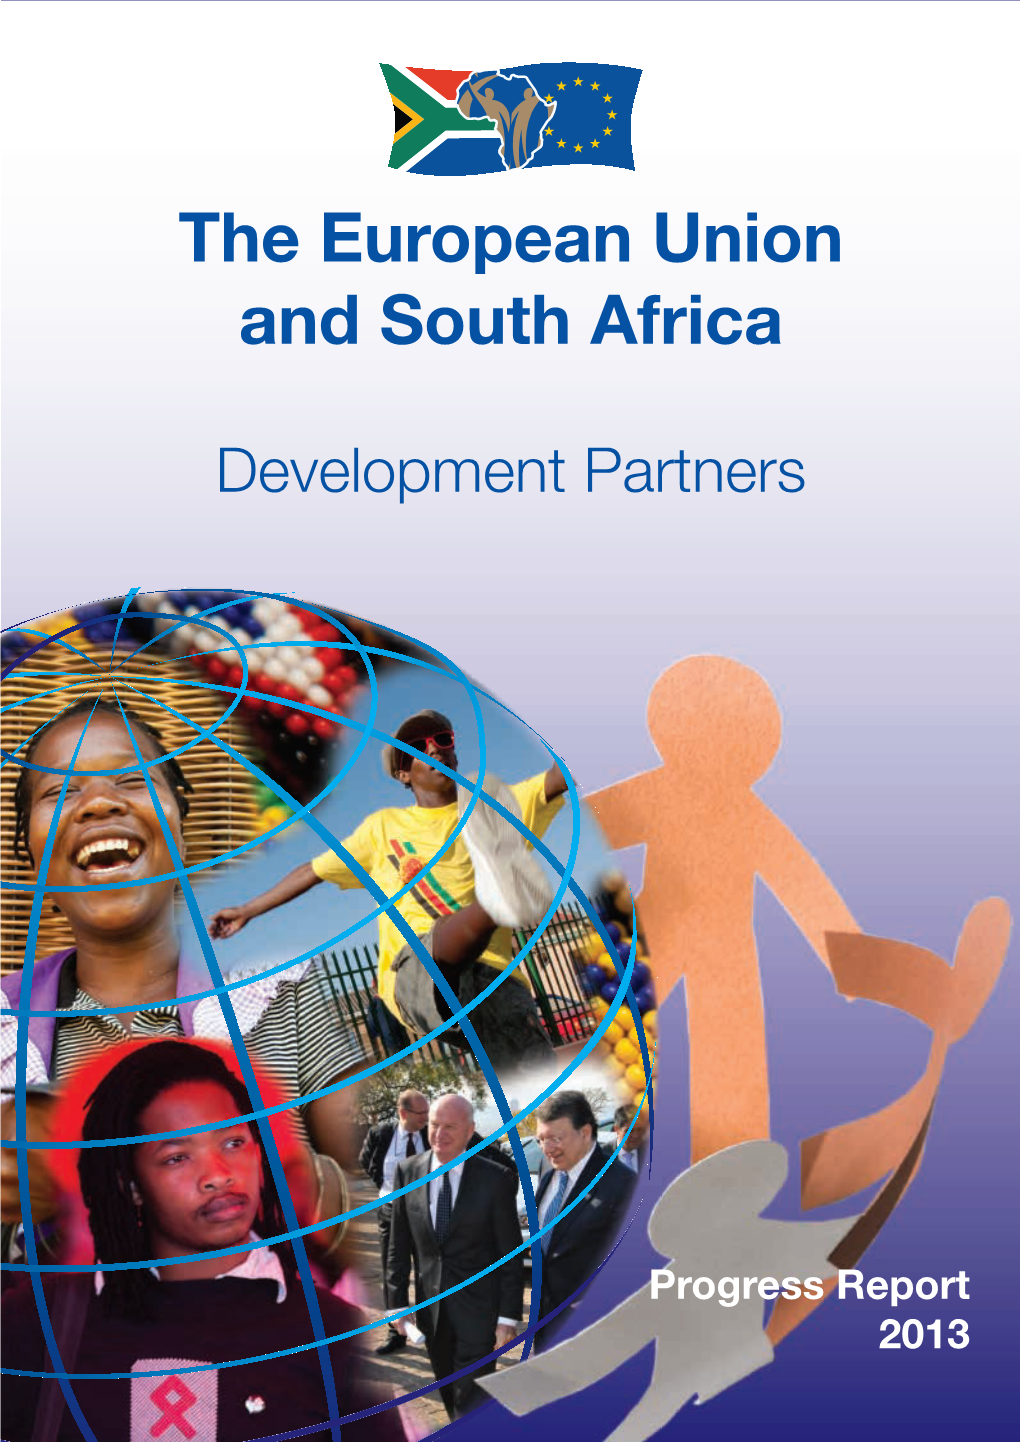 Progress Report 2013 the European Union the European Union and South Africa - and South Africa - Development Partners Development Partners